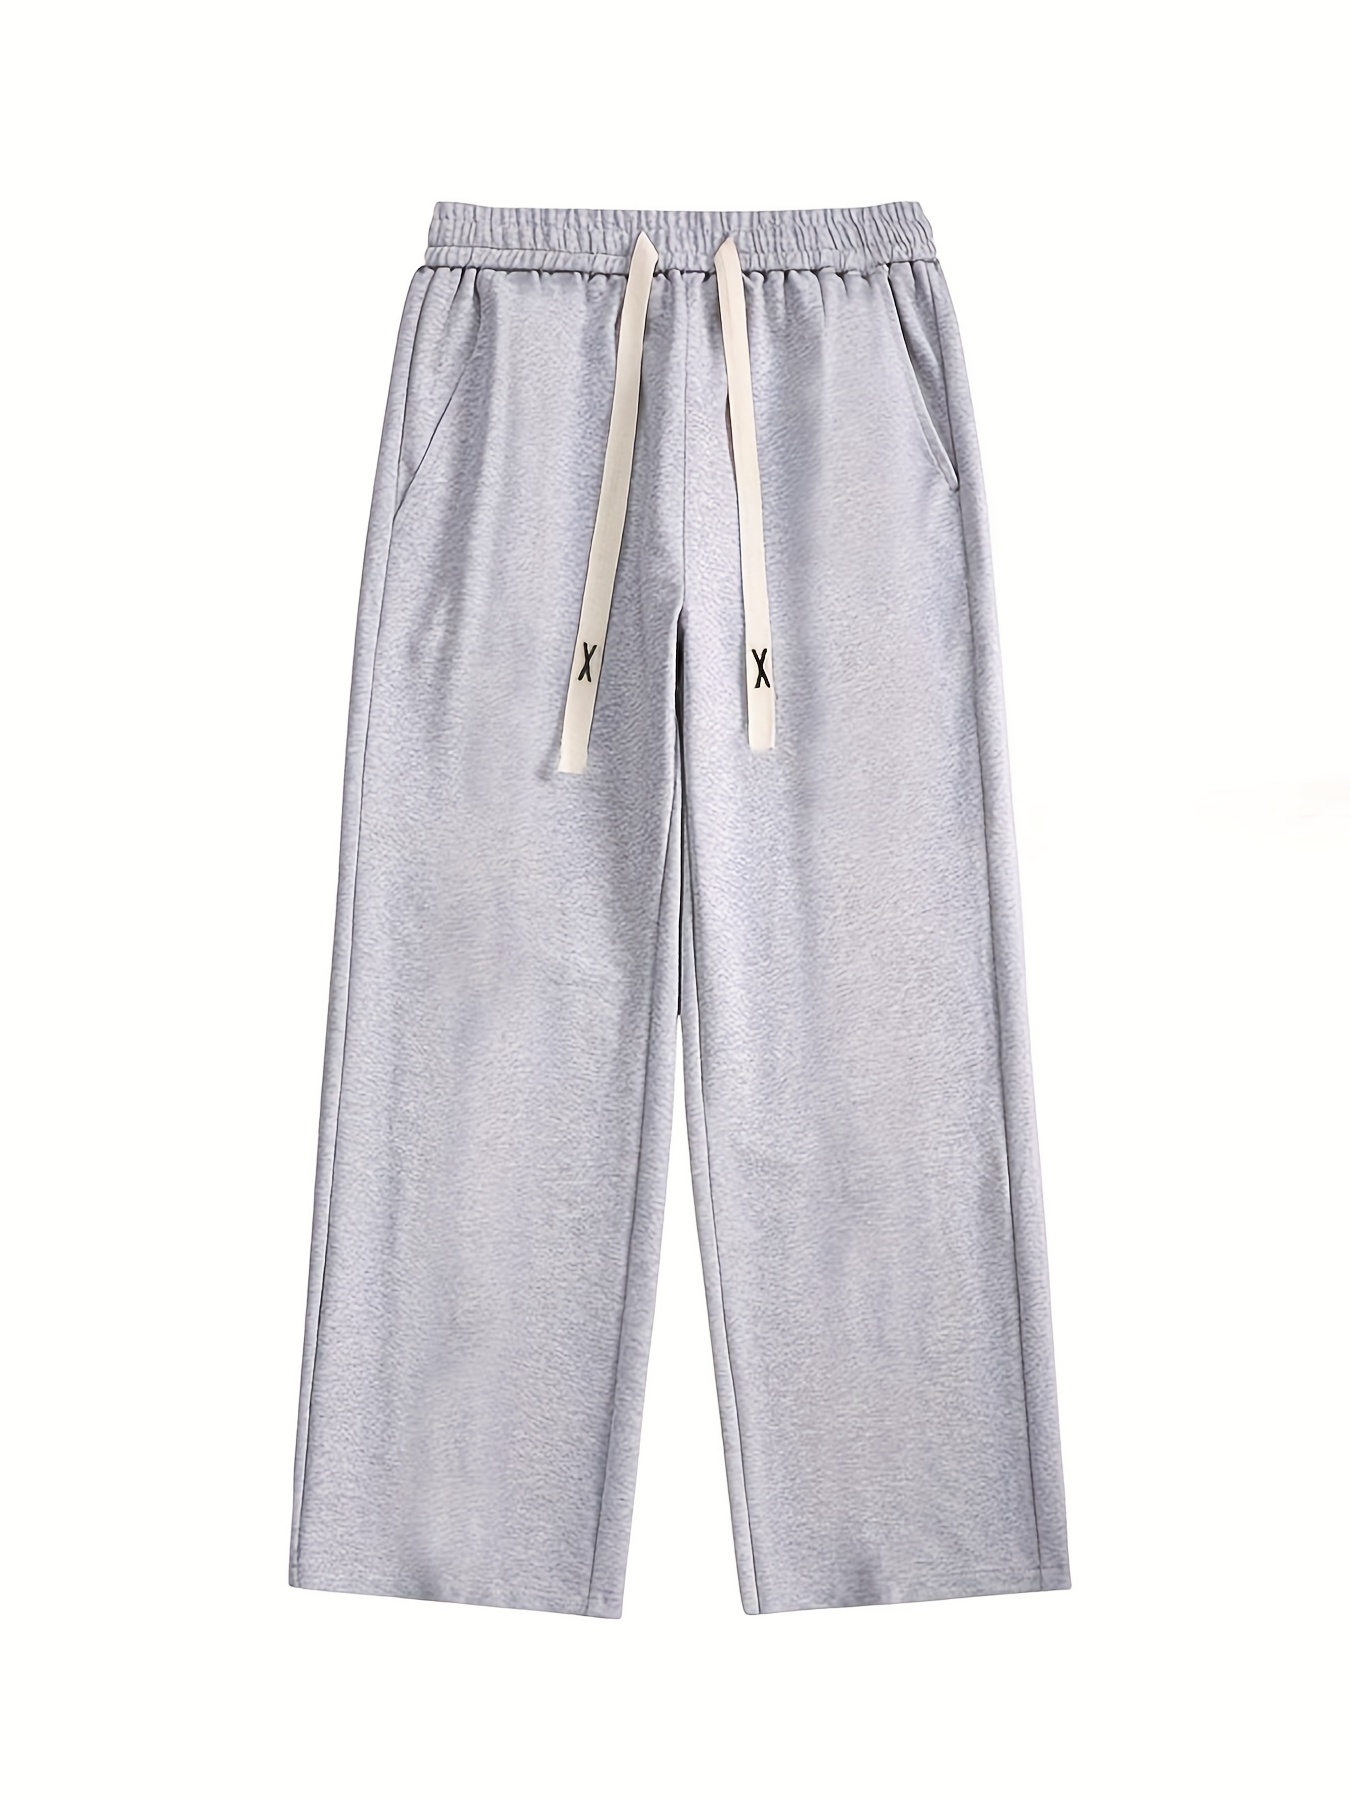 New York Pattern, Men's Drawstring Sweatpants, Pocket Casual Comfy Jogger Pants, Mens Clothing for Autumn Winter,Temu